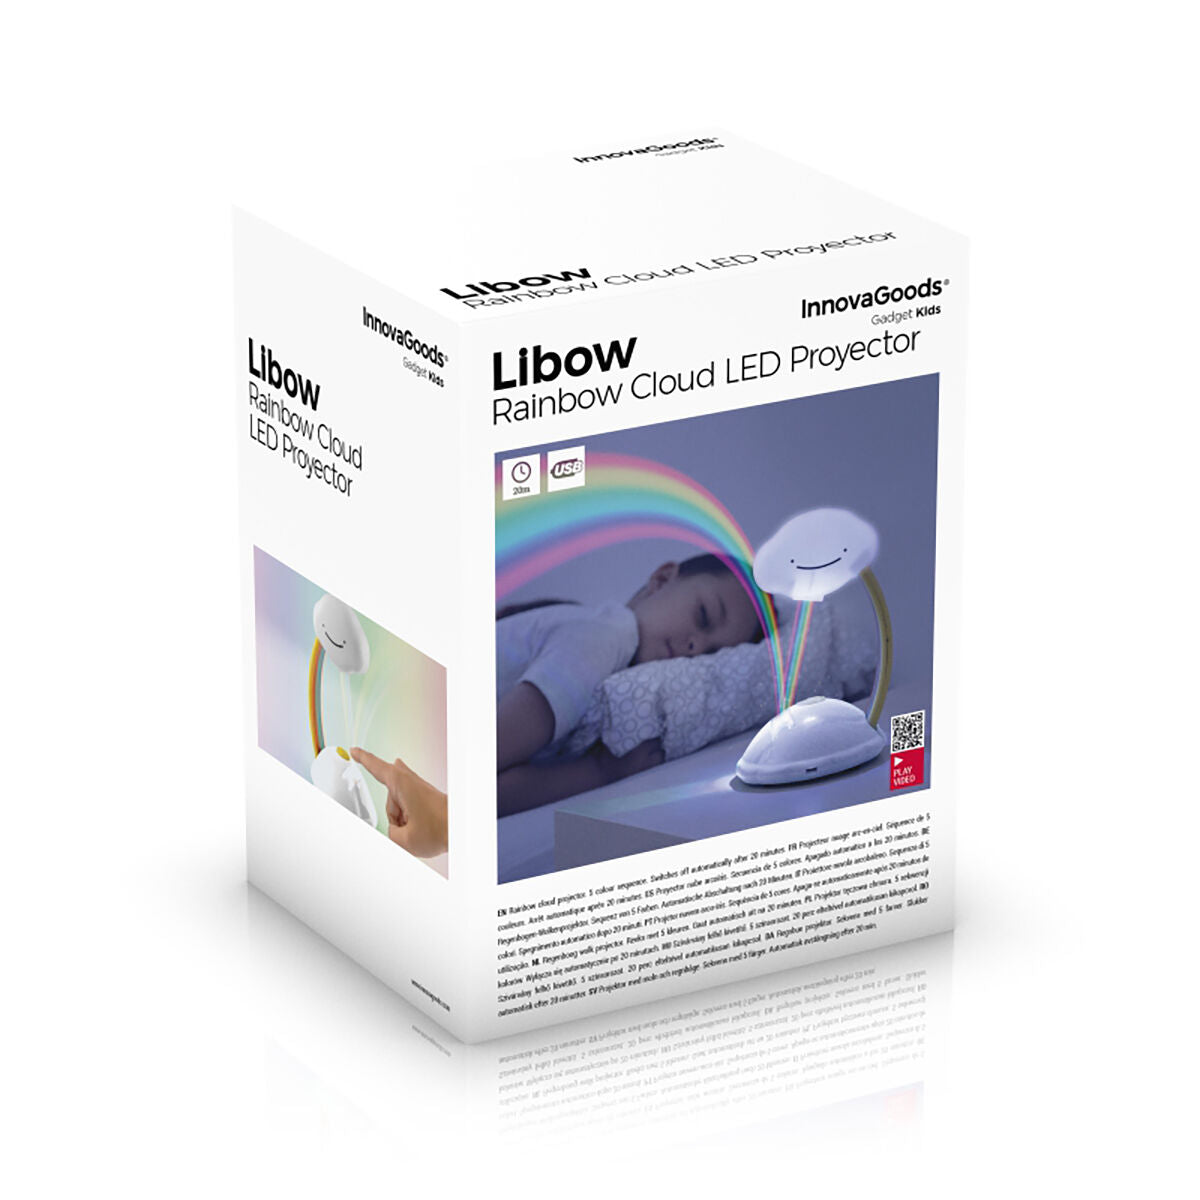 Kaufe LED-Projektor Regenbogen Wolken Libow InnovaGoods bei AWK Flagship um € 27.00